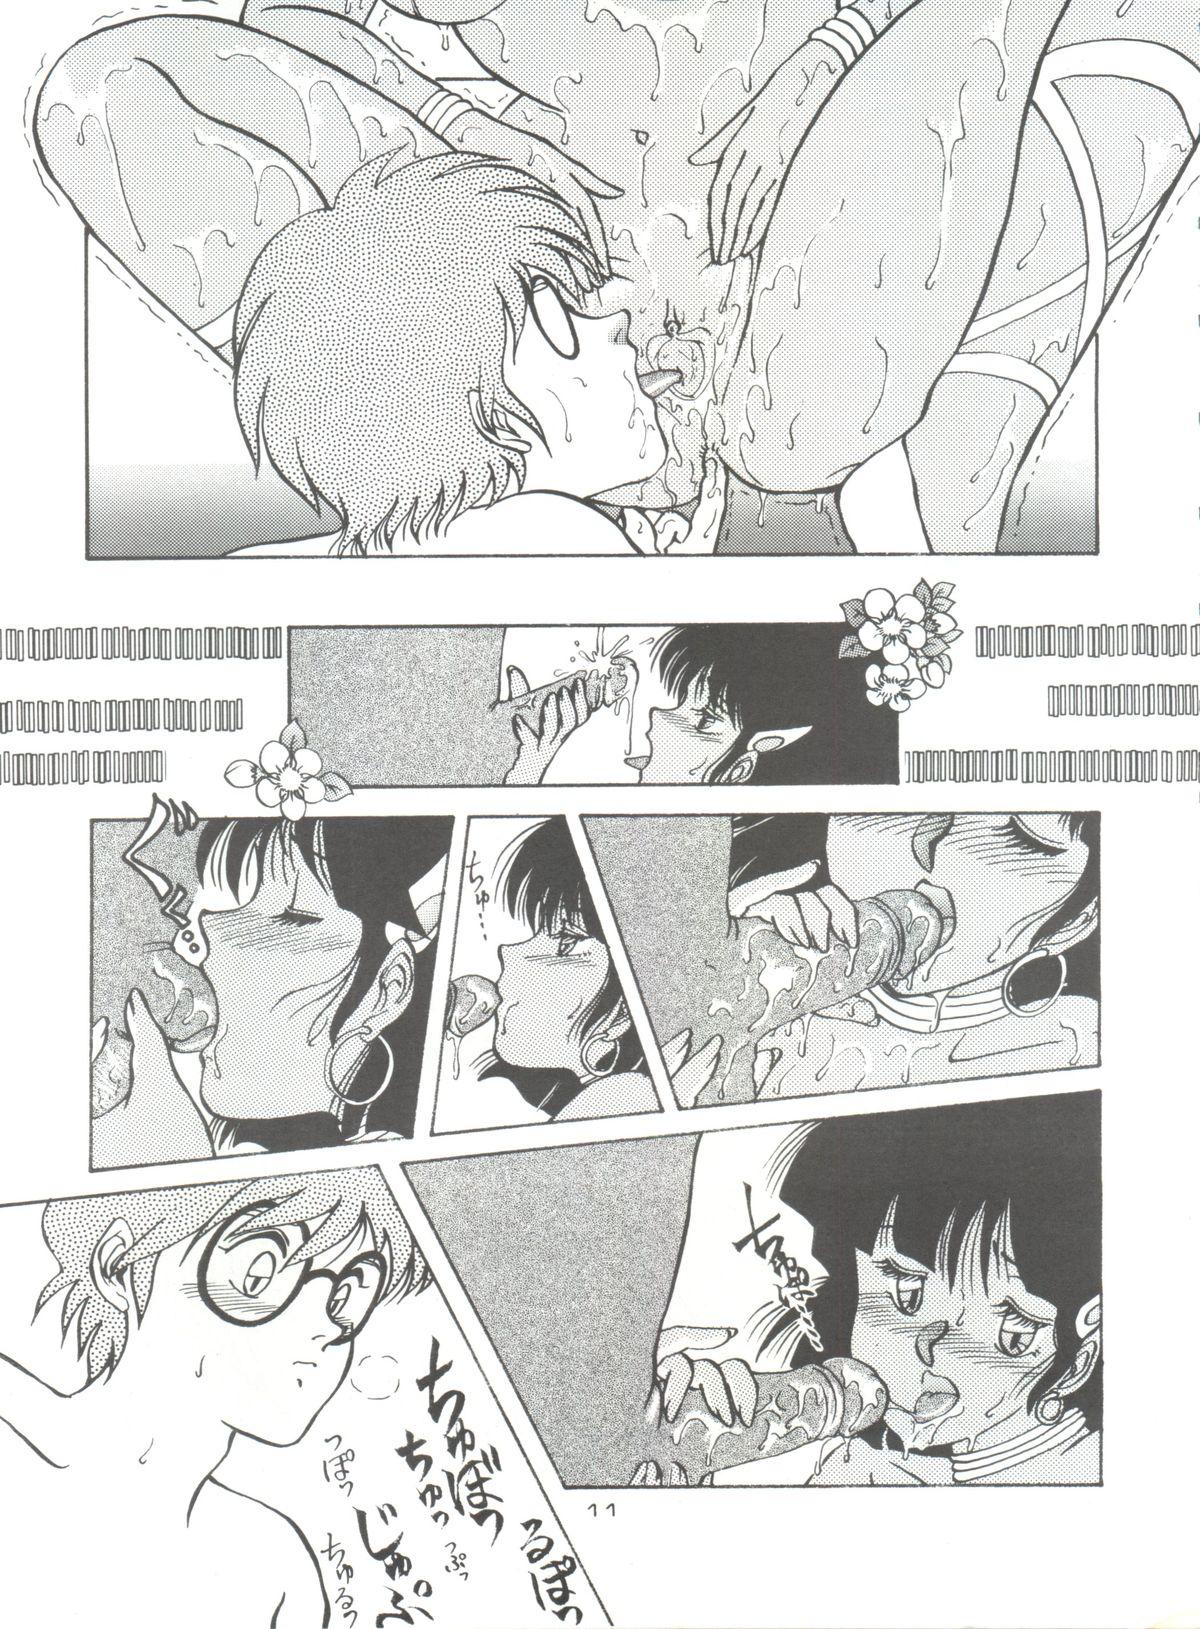 Scandal Nadia Girls in Emerald Sea vol. 2 - Minies Club 23 - Fushigi no umi no nadia Free Hard Core Porn - Page 11